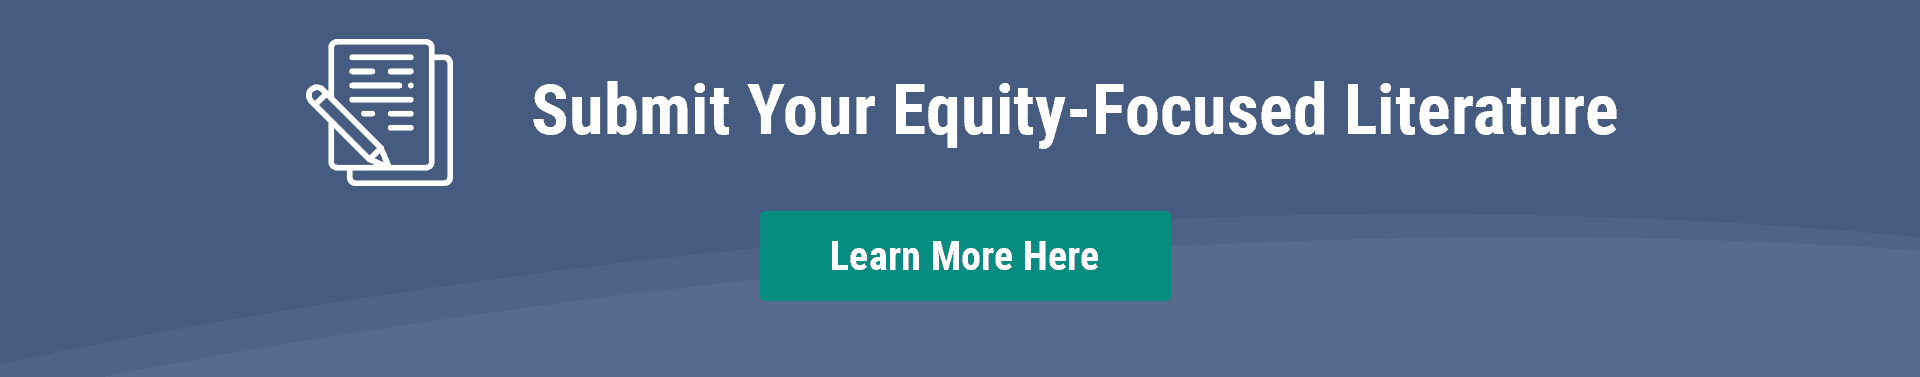 equity-focused literature button